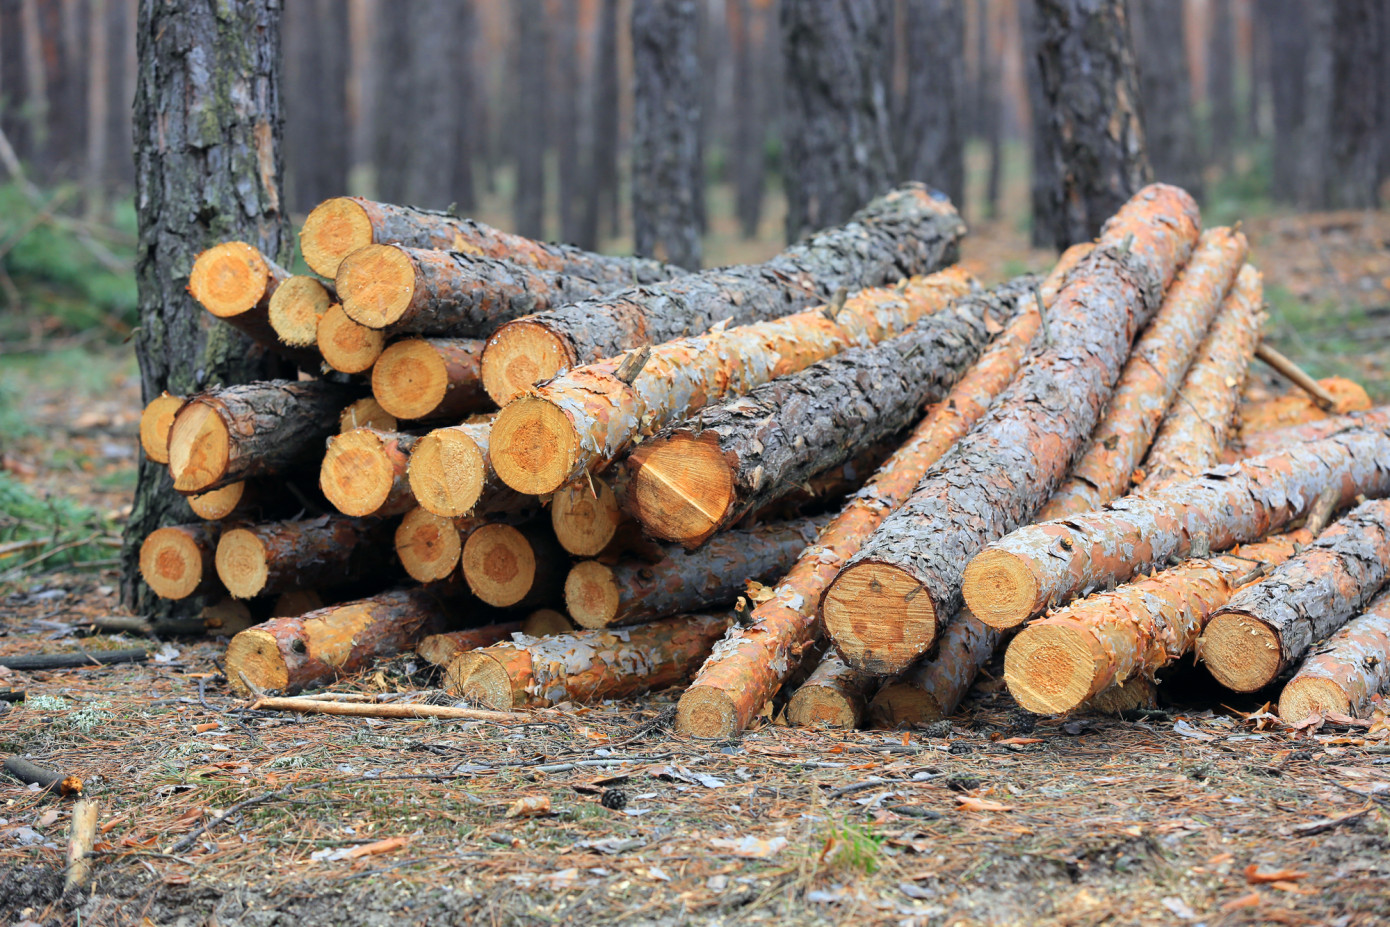 Finnish pulpwood prices soared in April